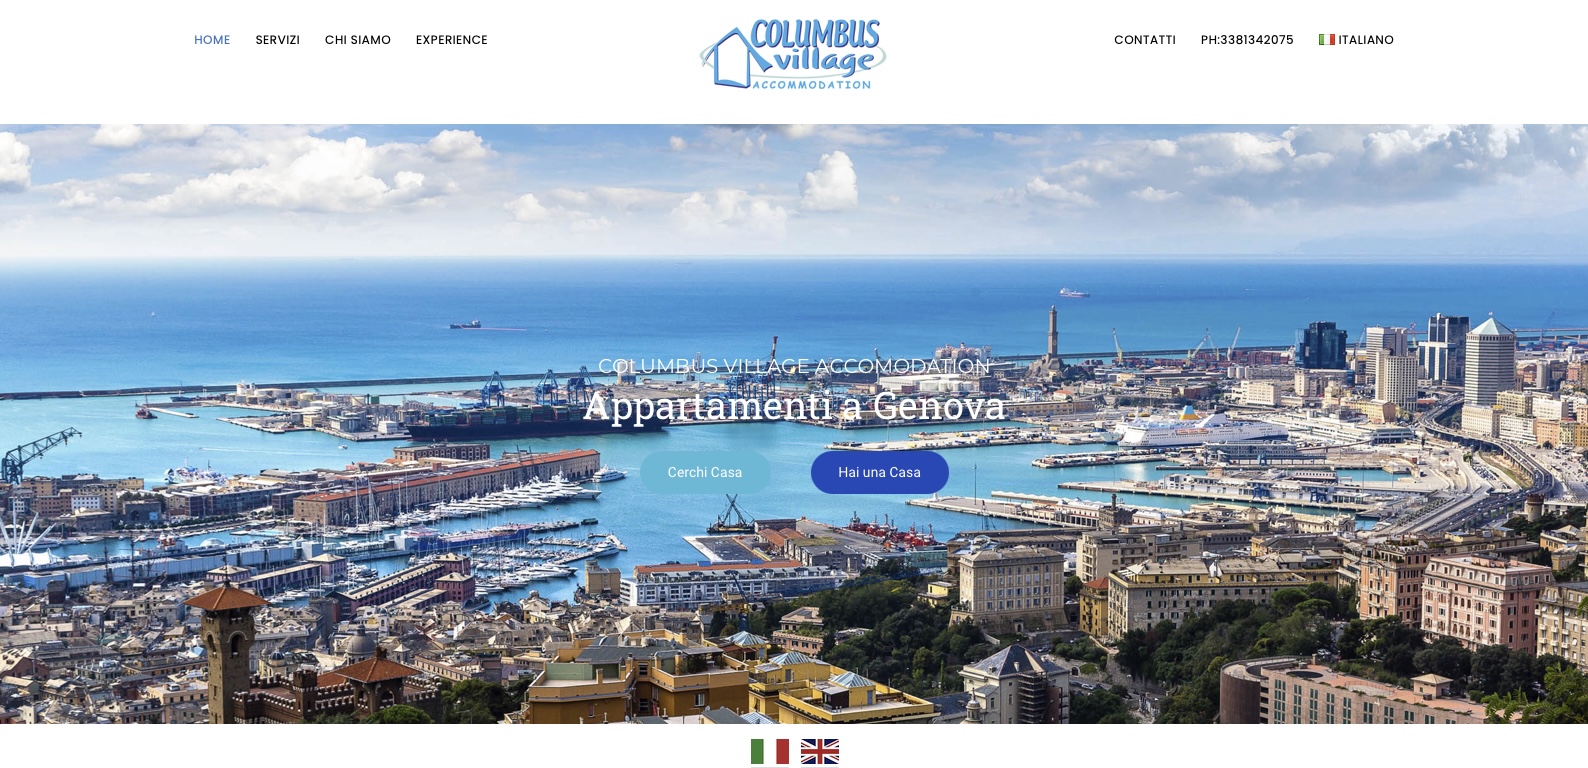 columbus-village-new-website-redesign